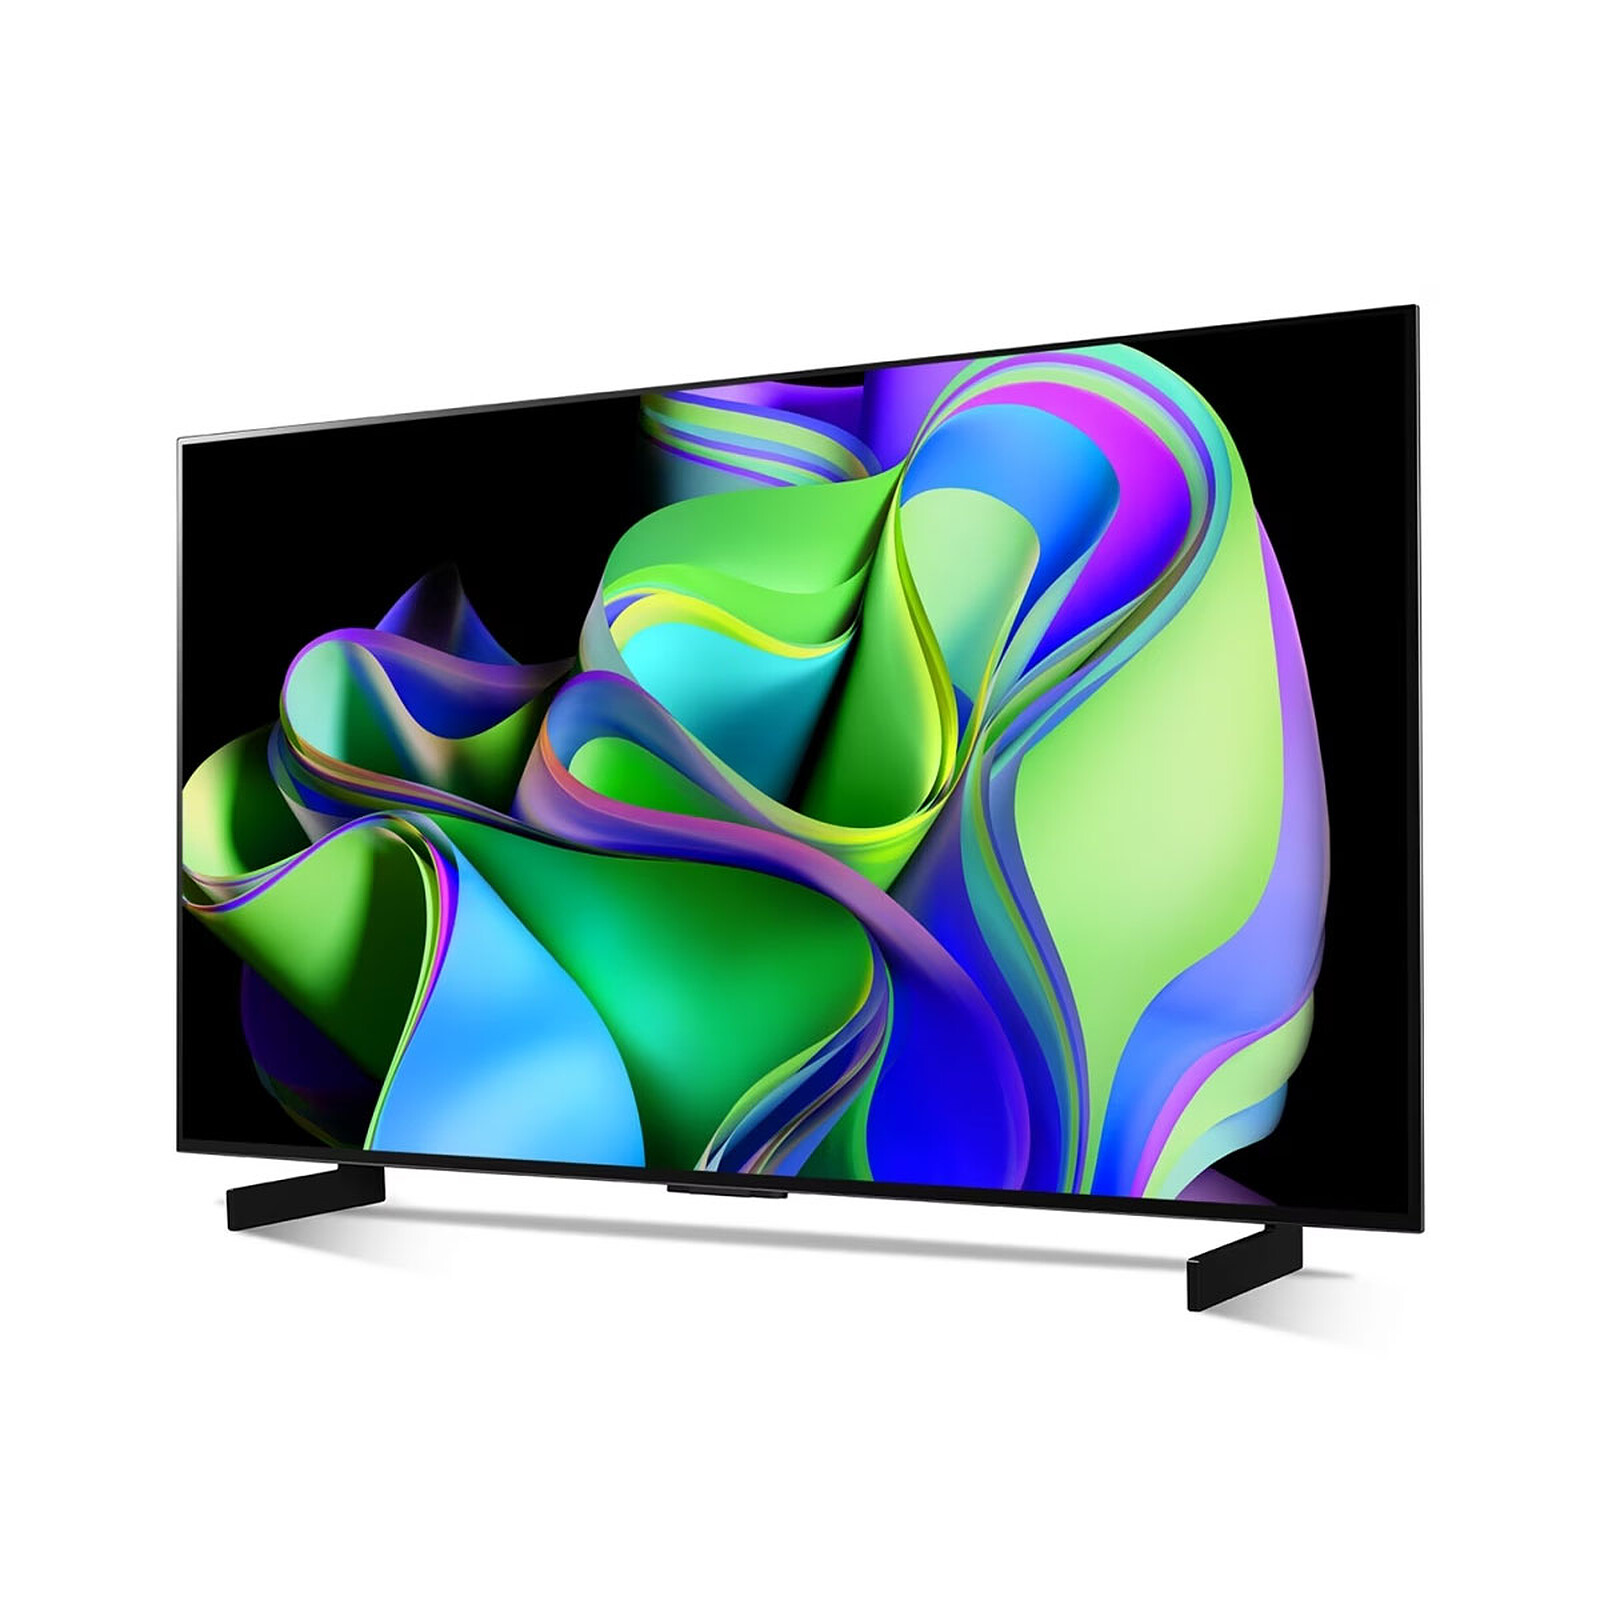 Tv Vision 20 Pulgadas Televisor LED Full HD USB HDMI - Características, Opiniones